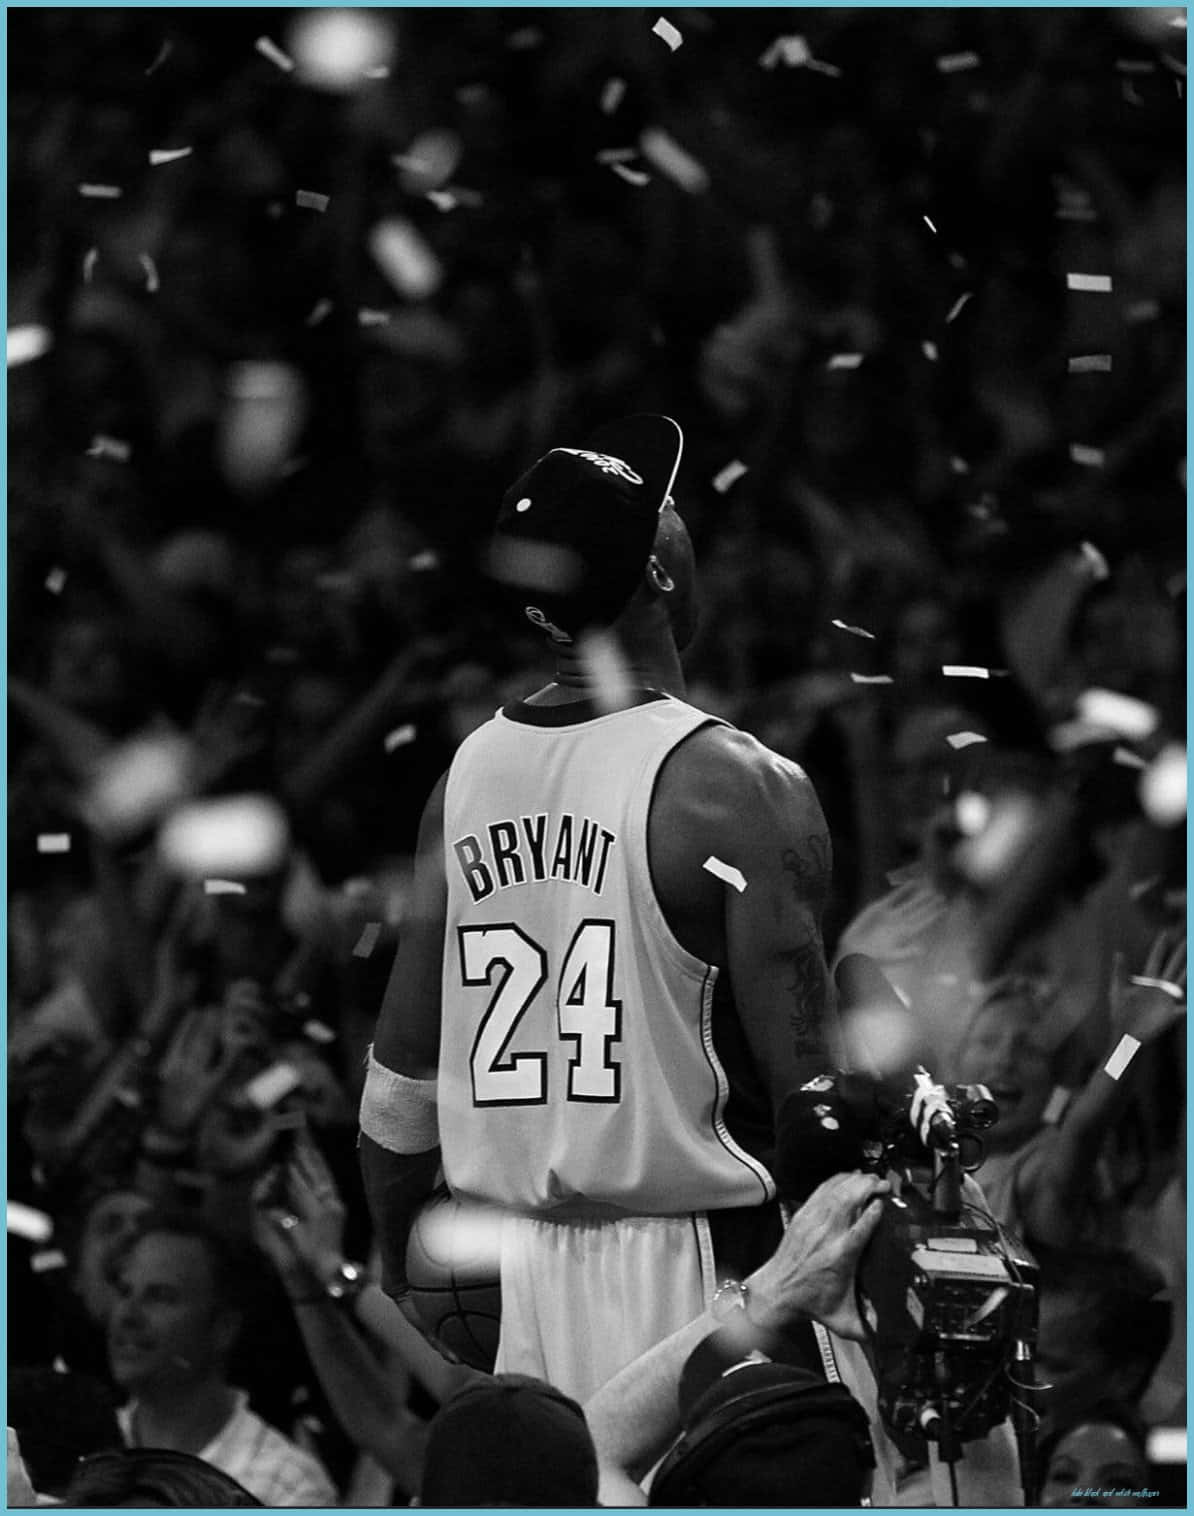 "Kobe Bryant - hard work pays off"